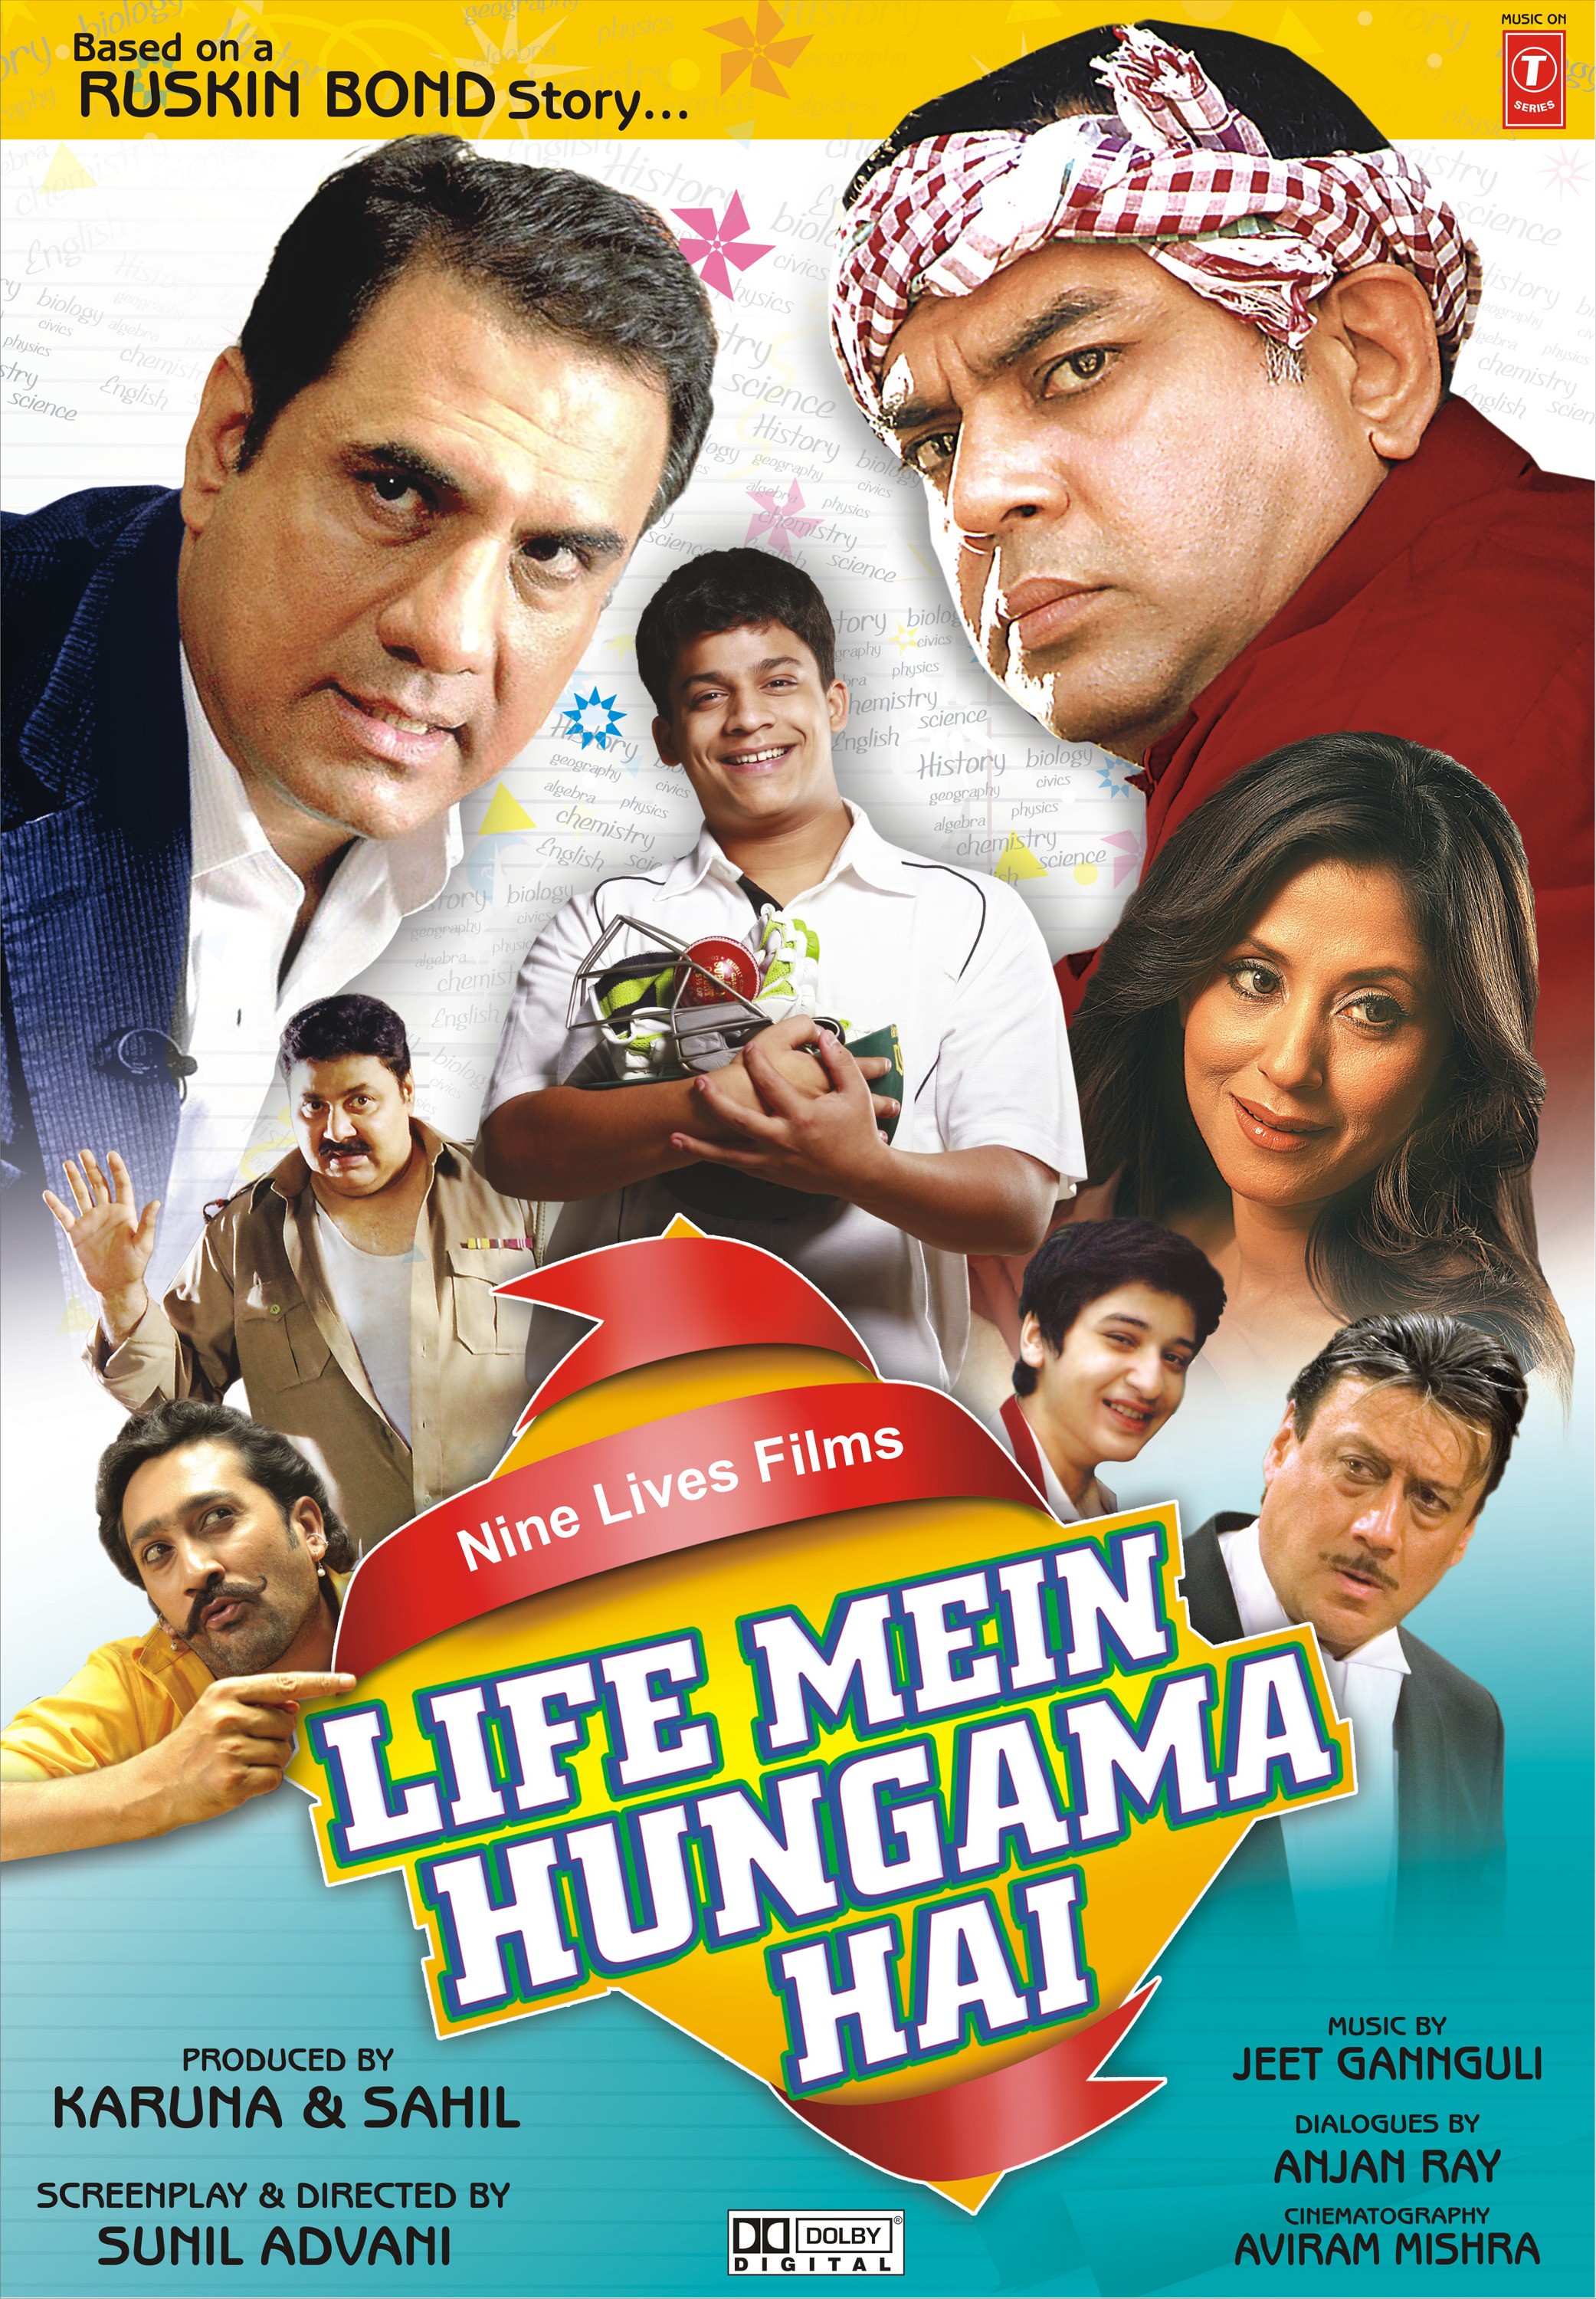 Mega Sized Movie Poster Image for Life Mein Hungama Hai (#1 of 2)